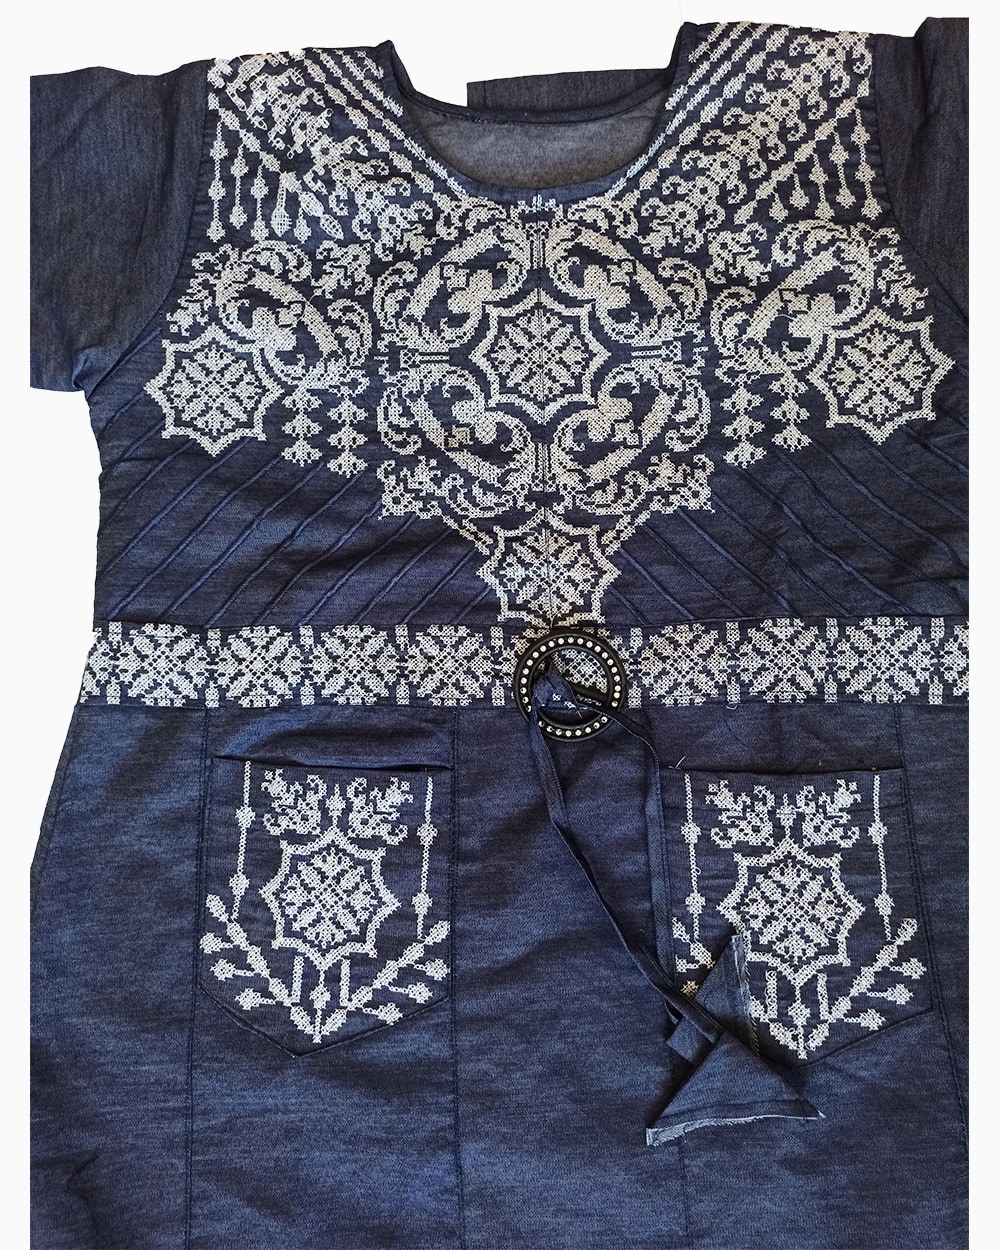 heavy Denim frock-cross stitch hand embroidery-2 pockets-mock embroidery waist belt-denim shirts for females online (4)